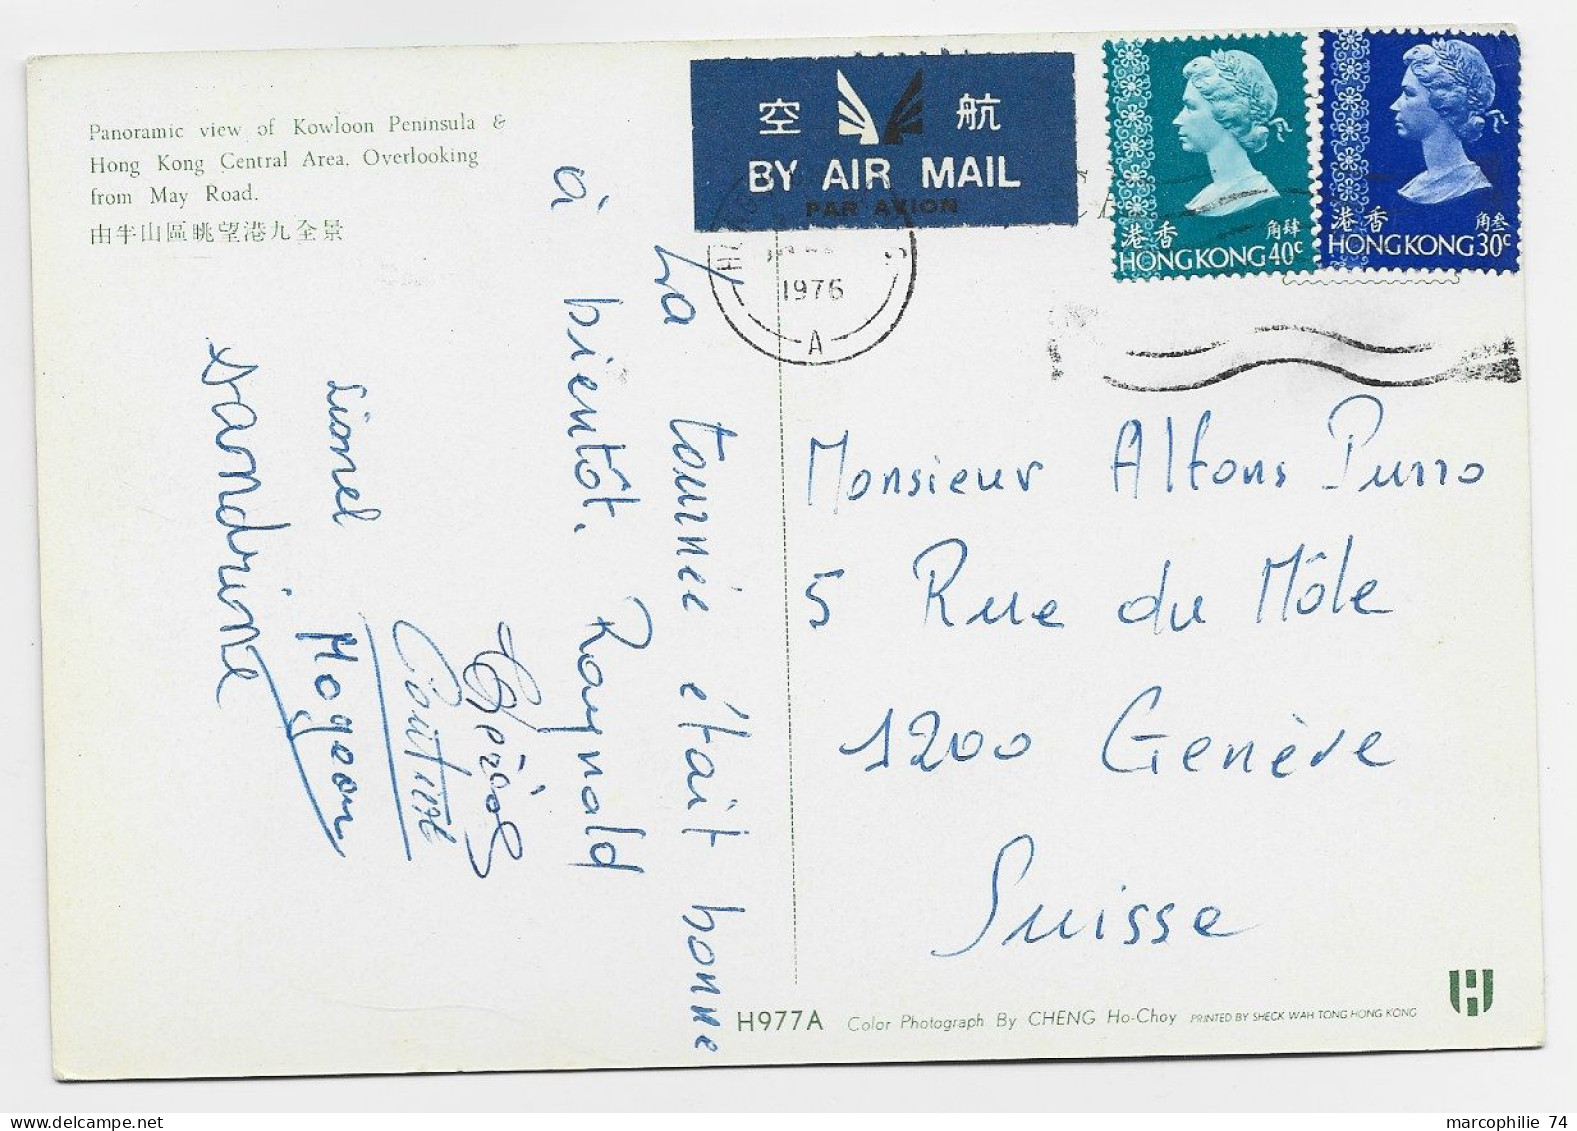 HONG KONG 40C+30C CARD AIR MAIL 1976 TO SUISSE - Briefe U. Dokumente